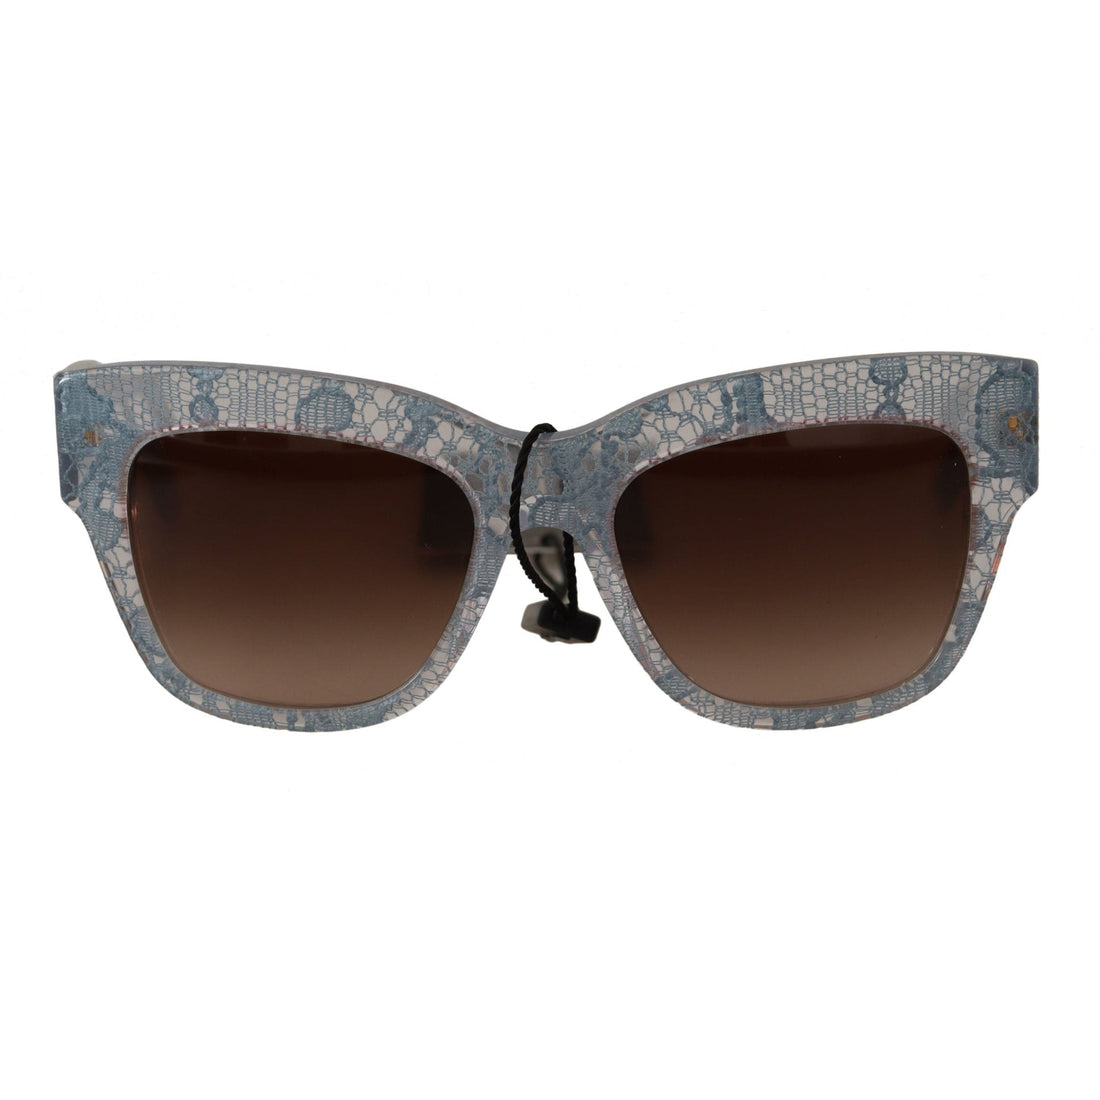 Dolce & Gabbana Blue Lace Acetate Rectangle Shades Sunglasses - Paris Deluxe